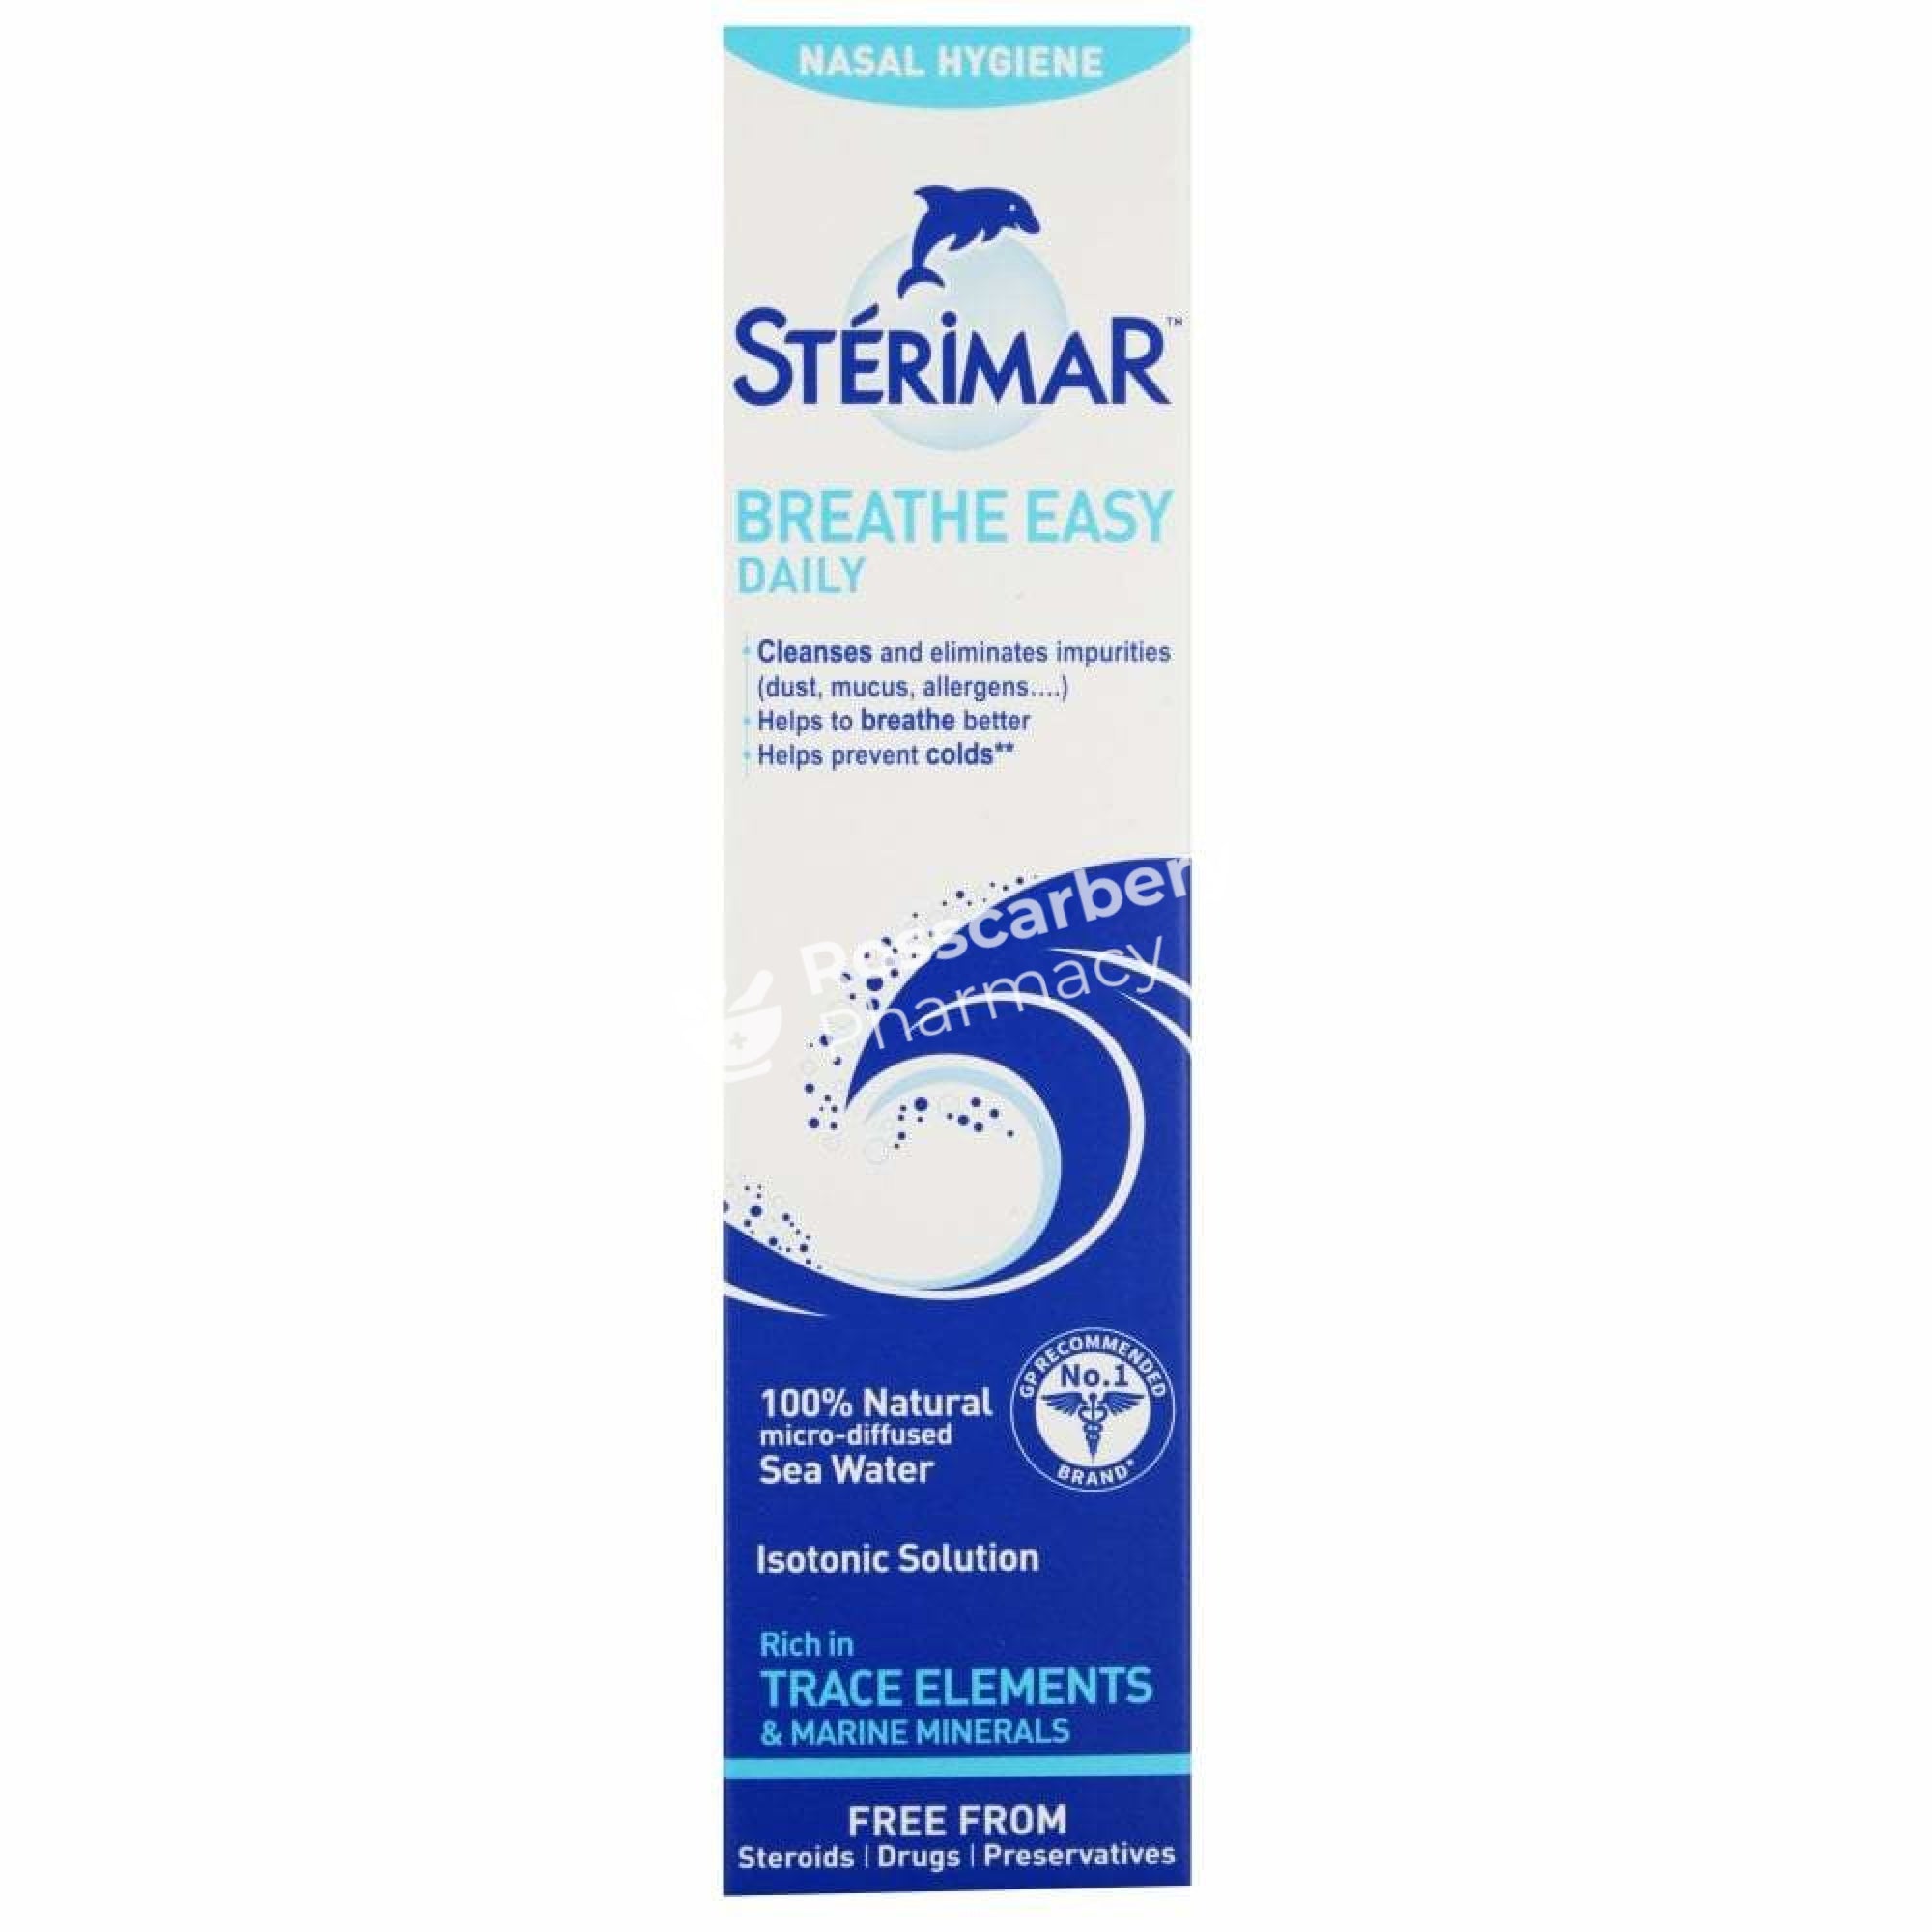 Sterimar Breathe Easy Daily Nasal Spray - Hygiene Blocked Nose & Sinus